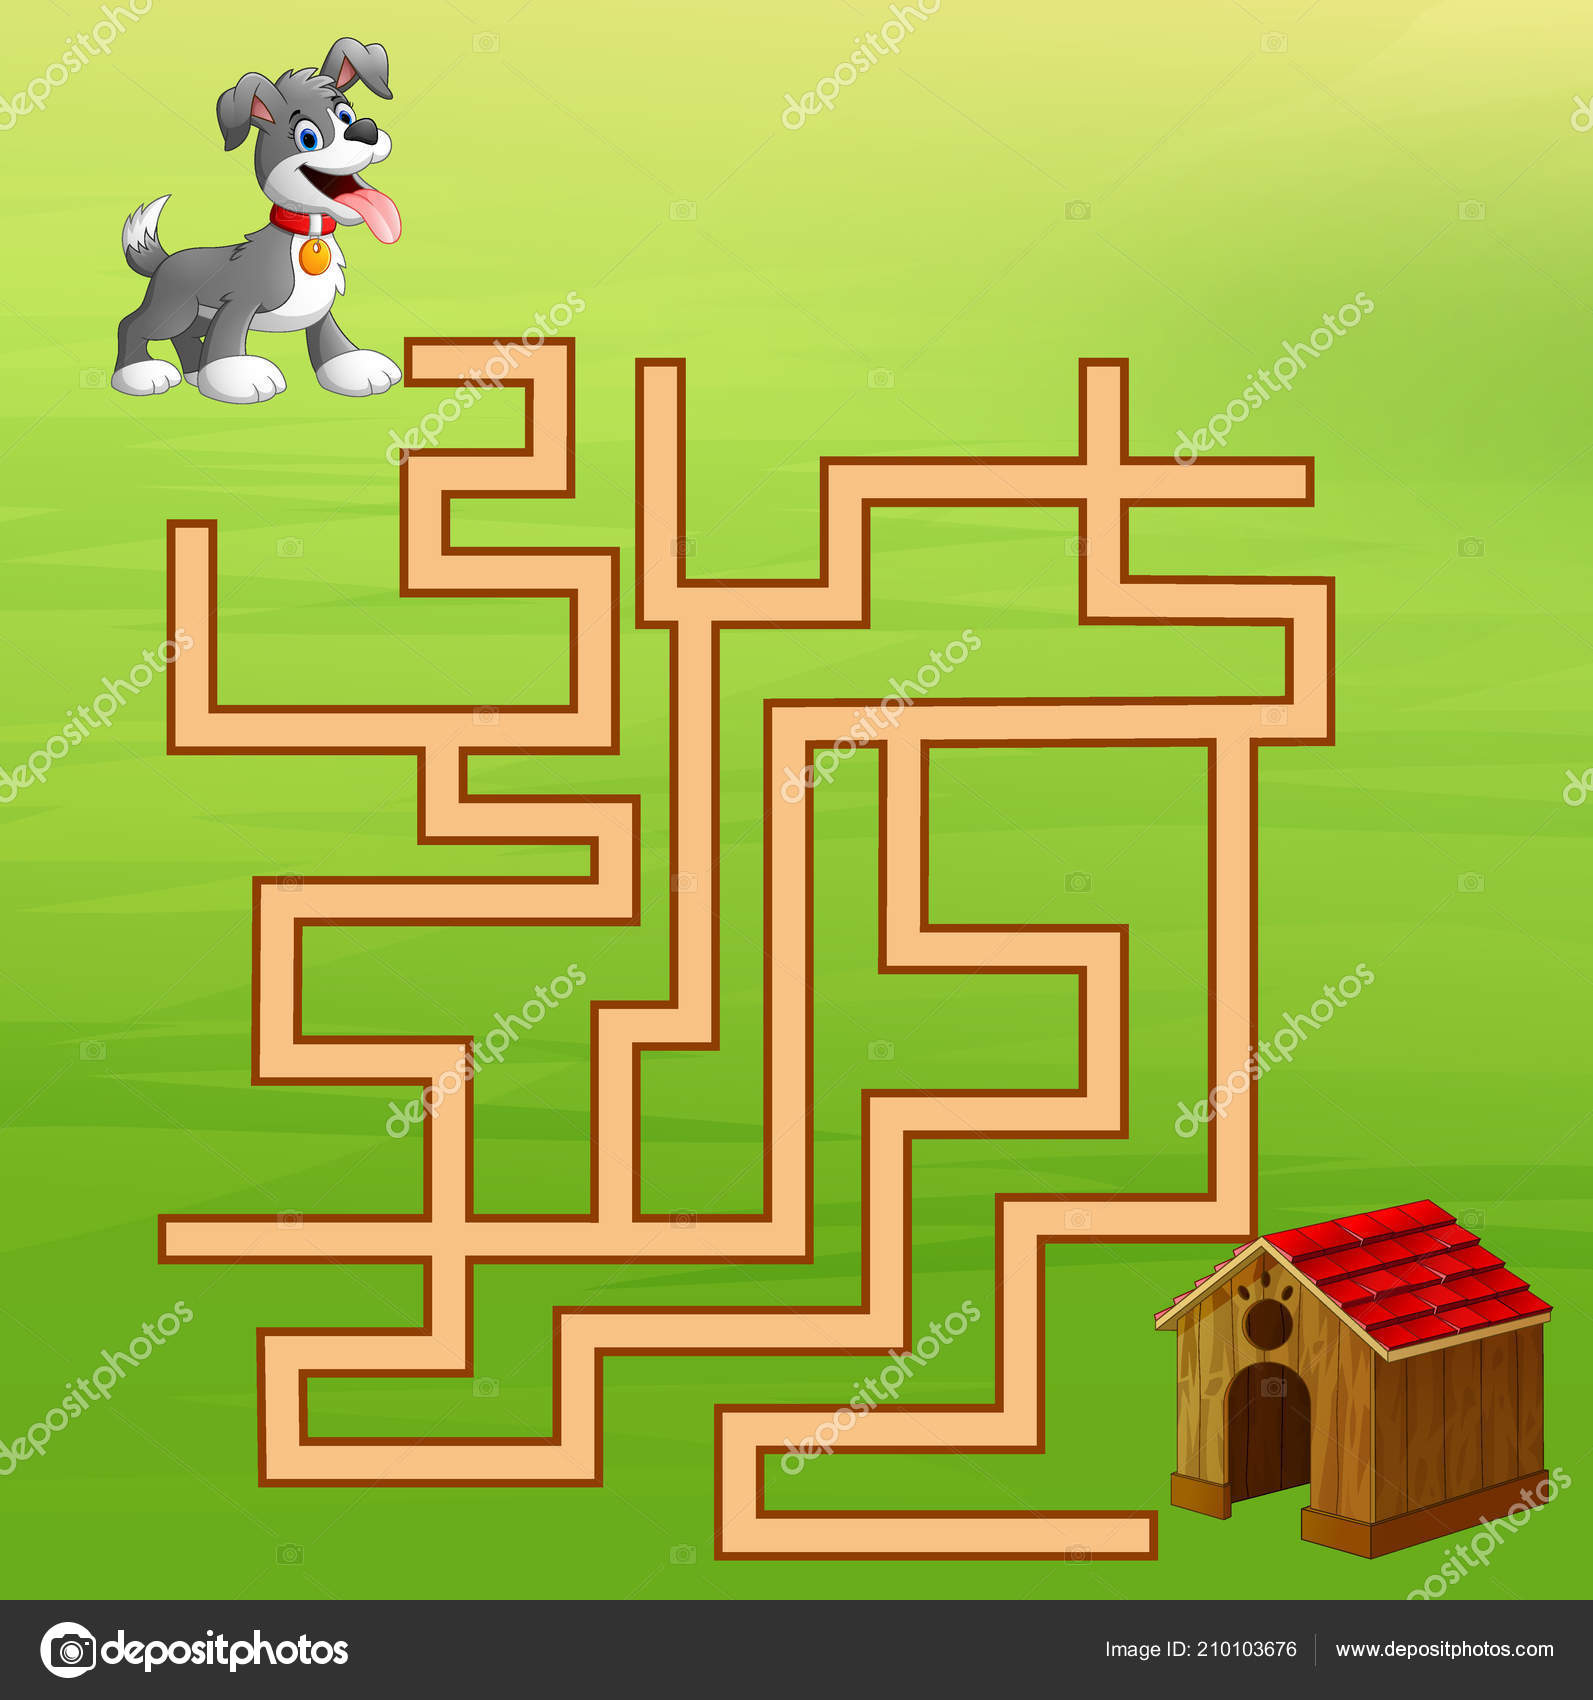 https://st4.depositphotos.com/6633222/21010/v/1600/depositphotos_210103676-stock-illustration-vector-illustration-game-dog-maze.jpg